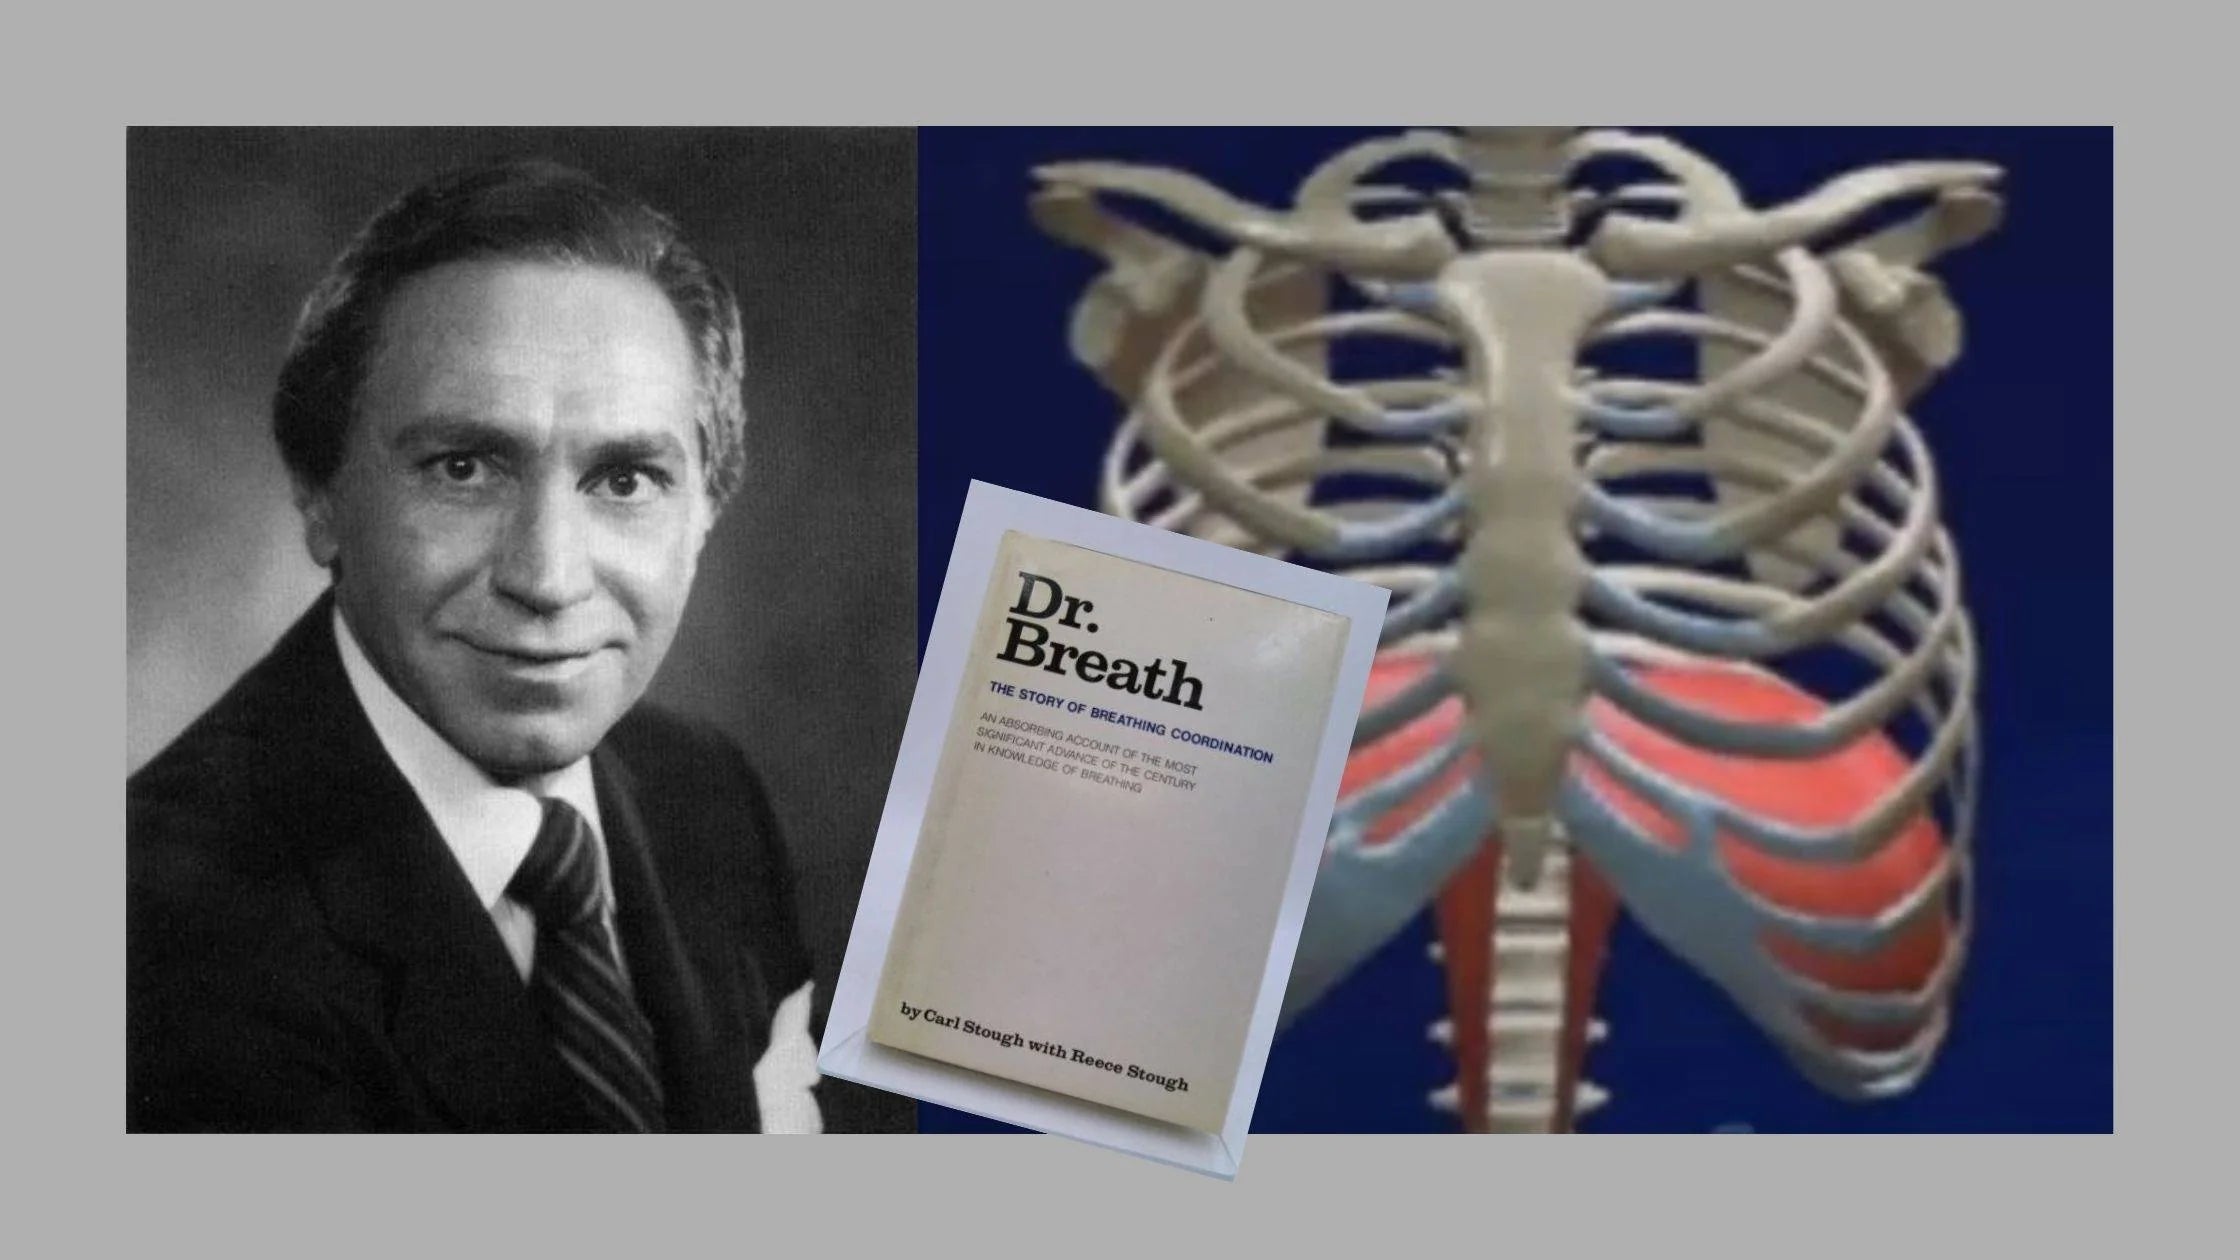 Carl Stough aka Dr. Breath: In Memorium